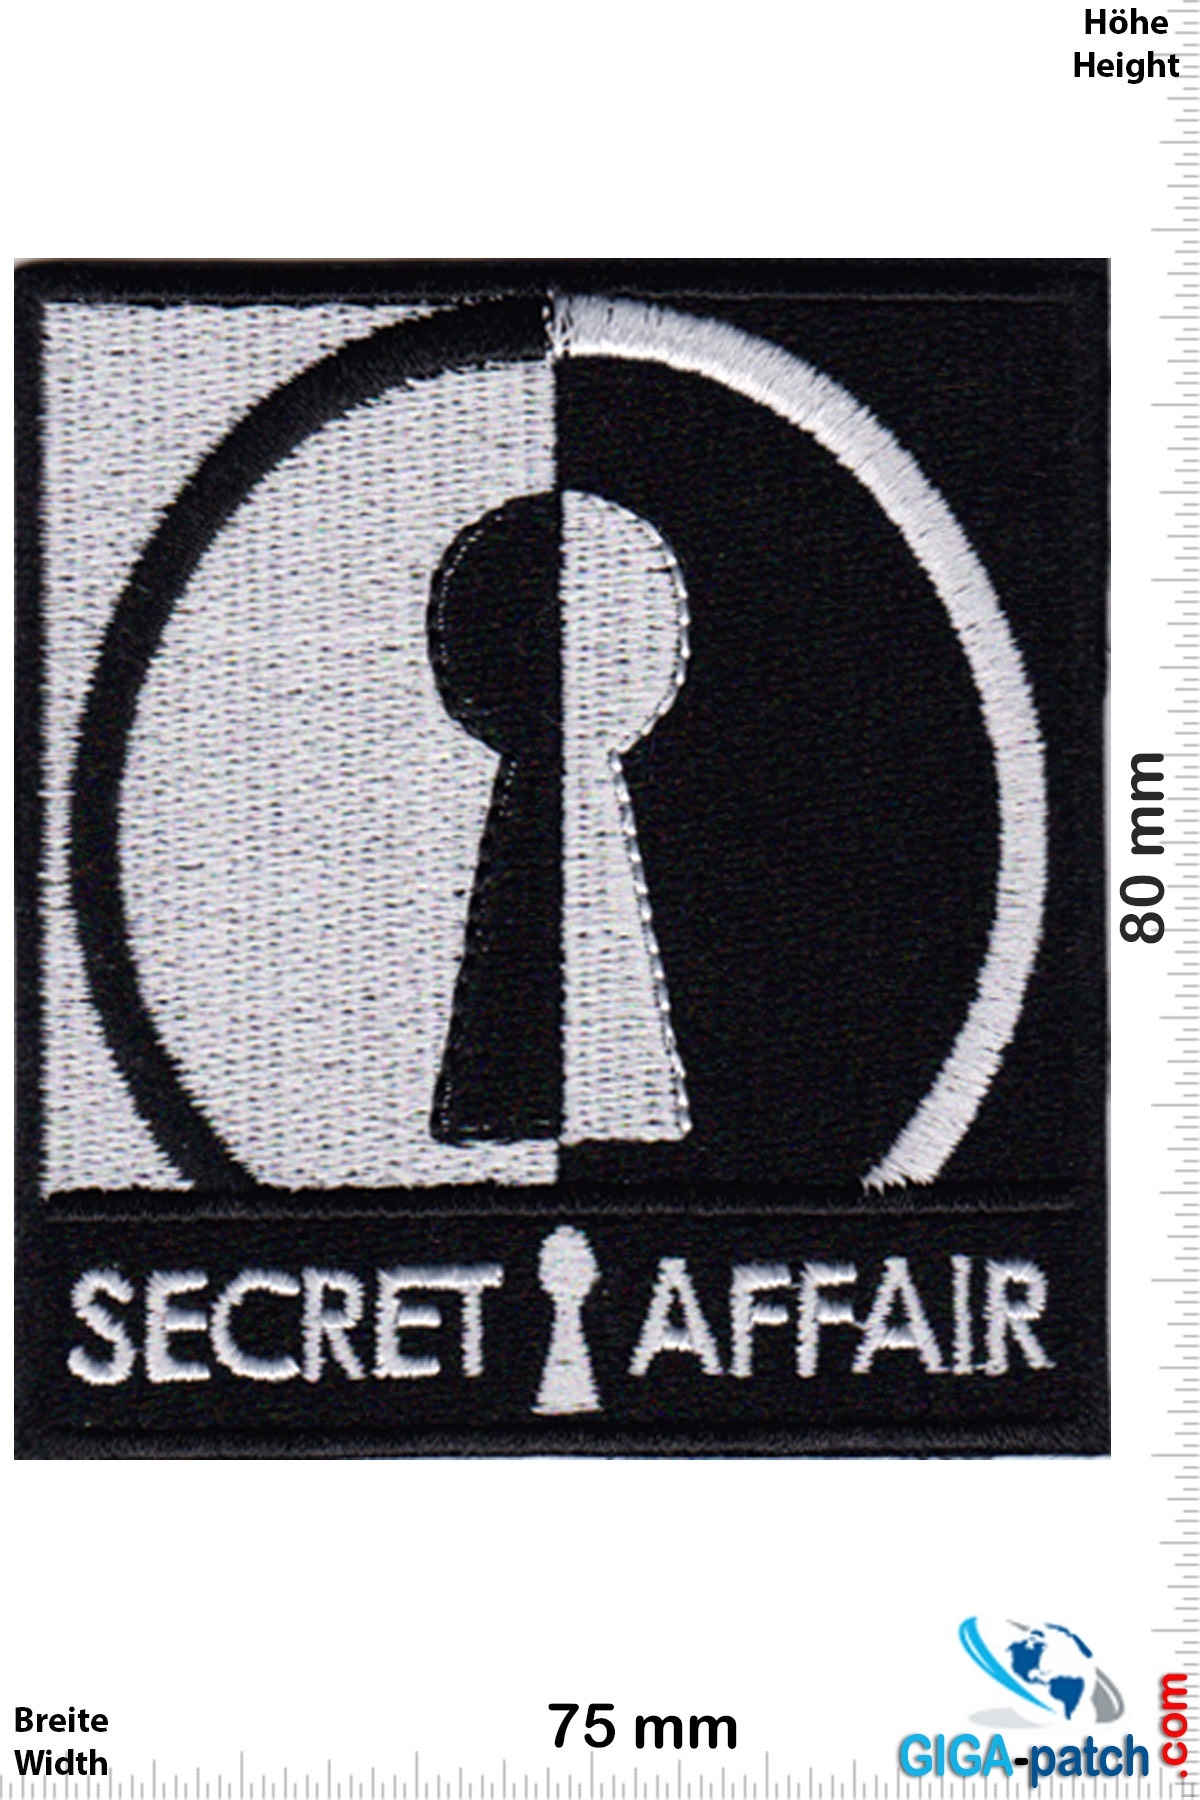 Secret Affair - Mod-Revival-Band